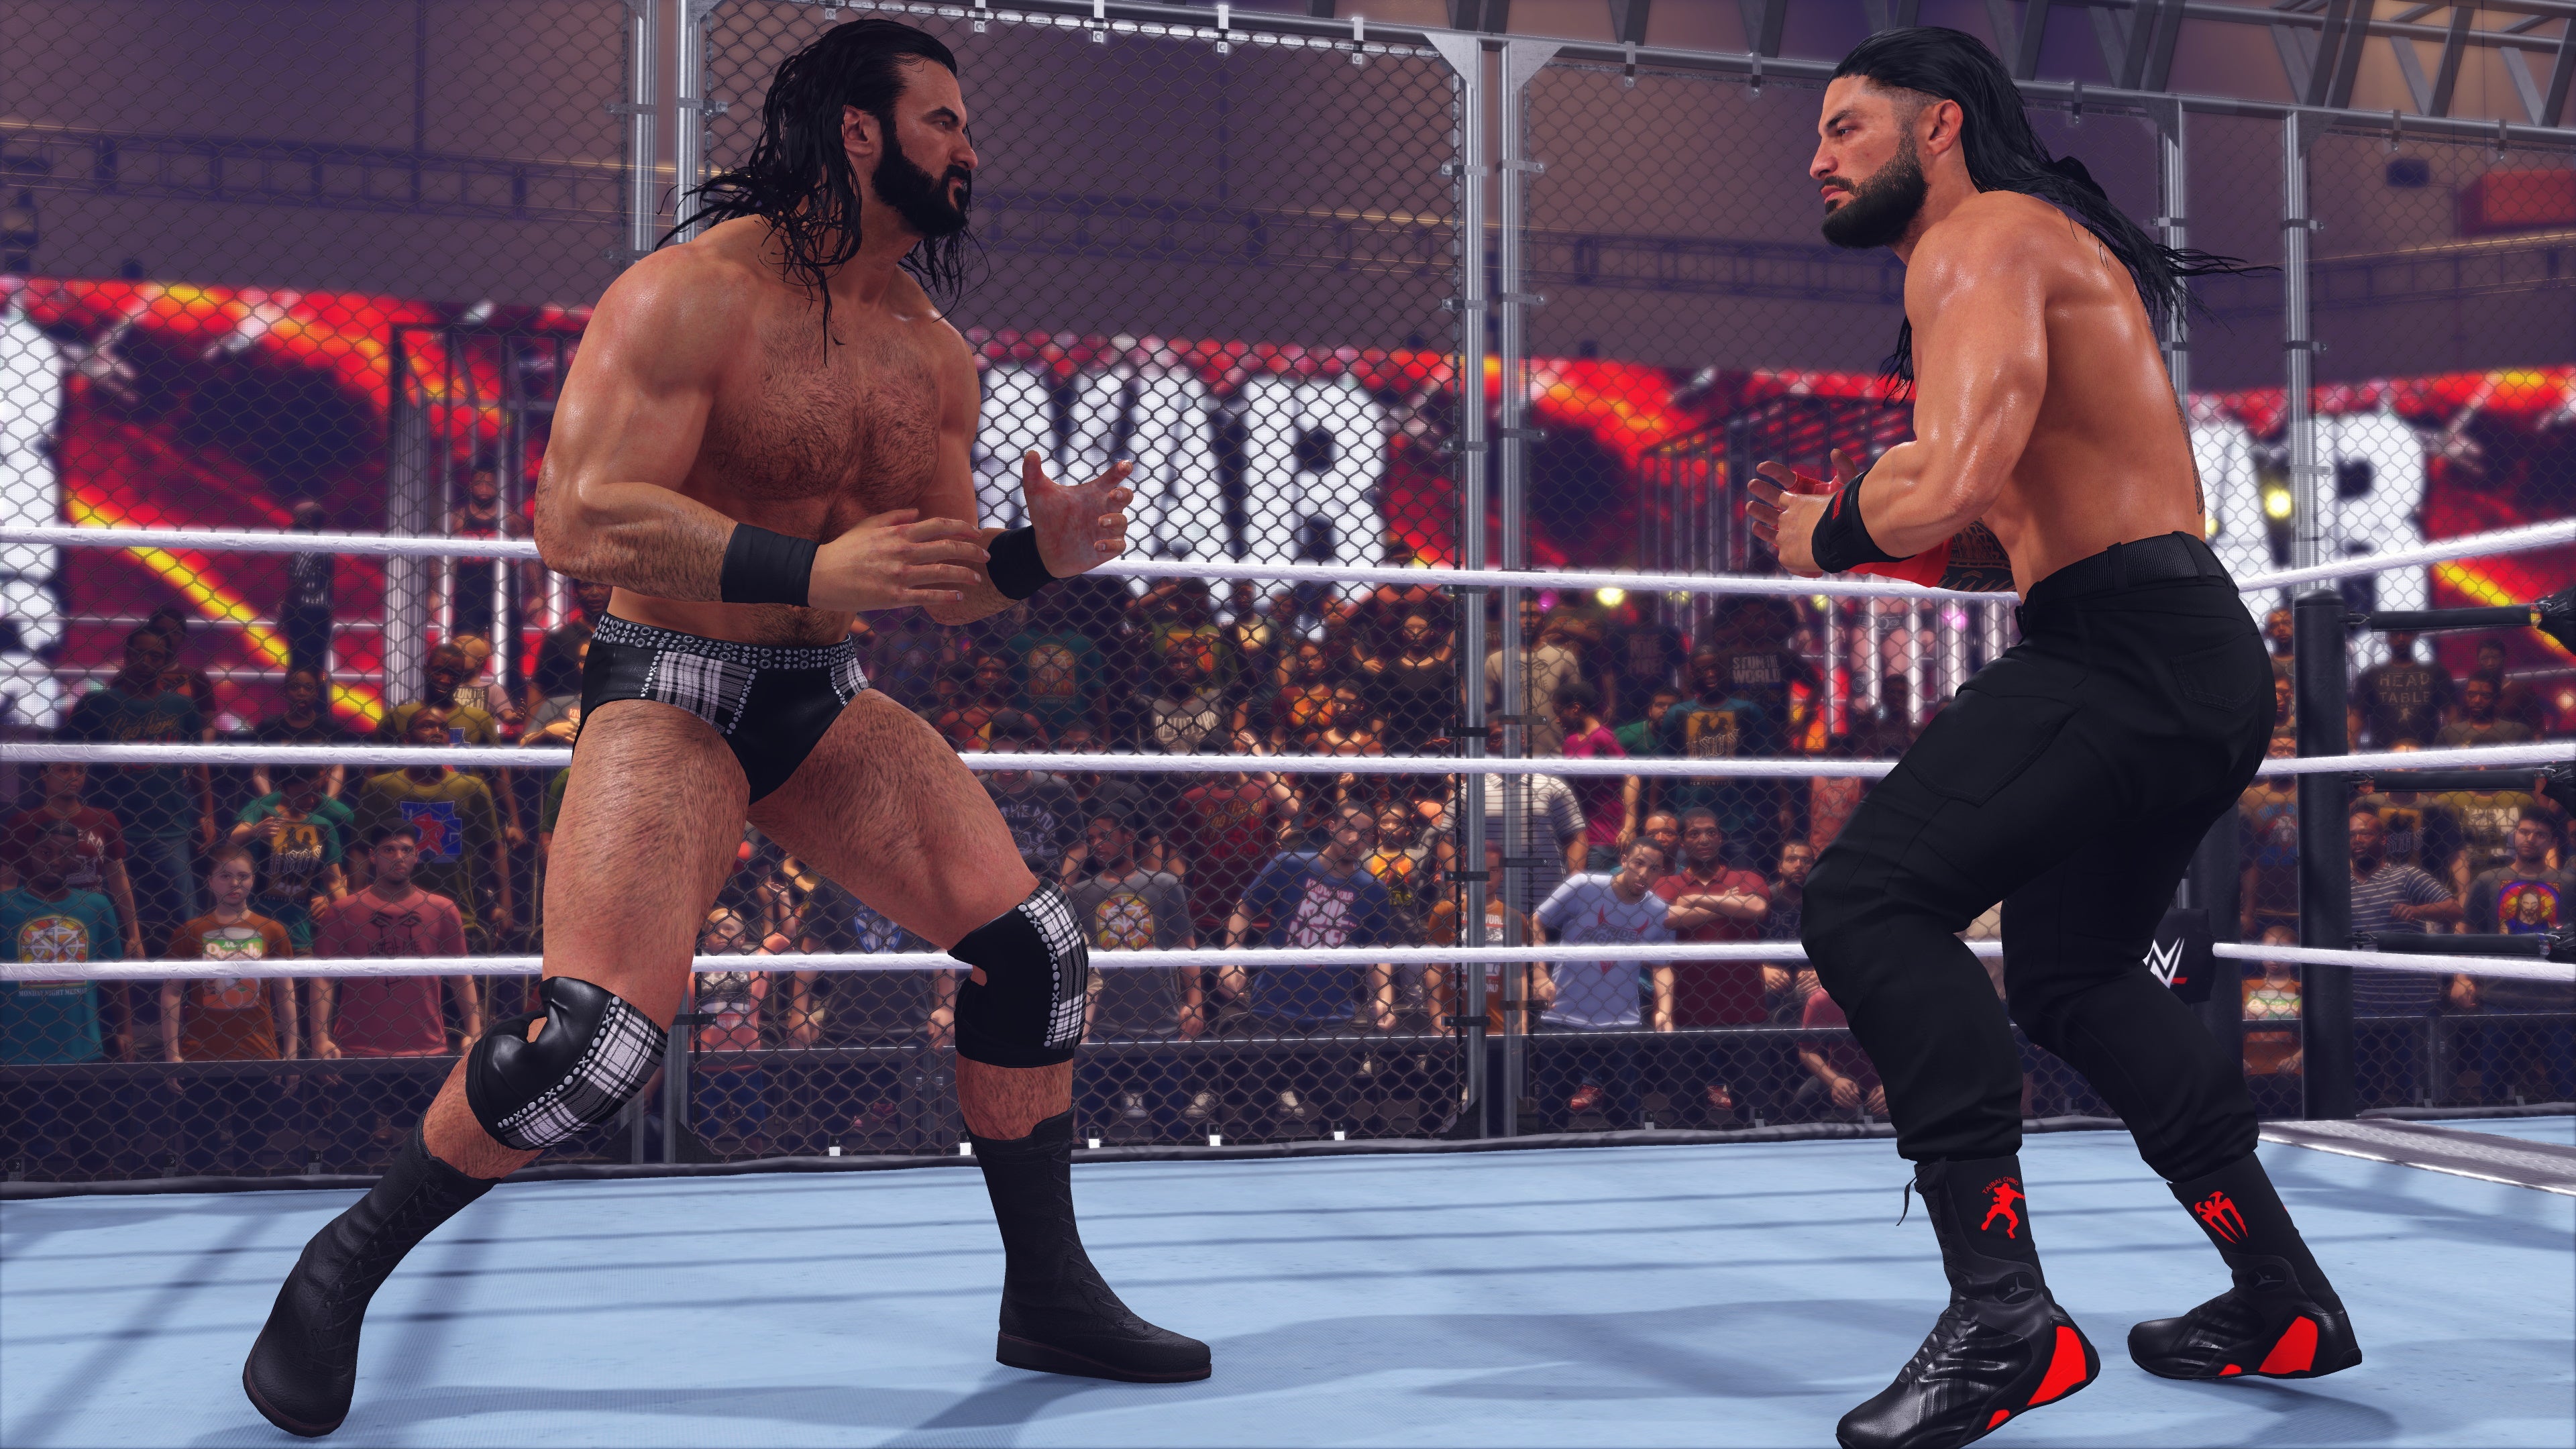 WWE 2K23 Standard Edition - Xbox One | Yard's Games Ltd